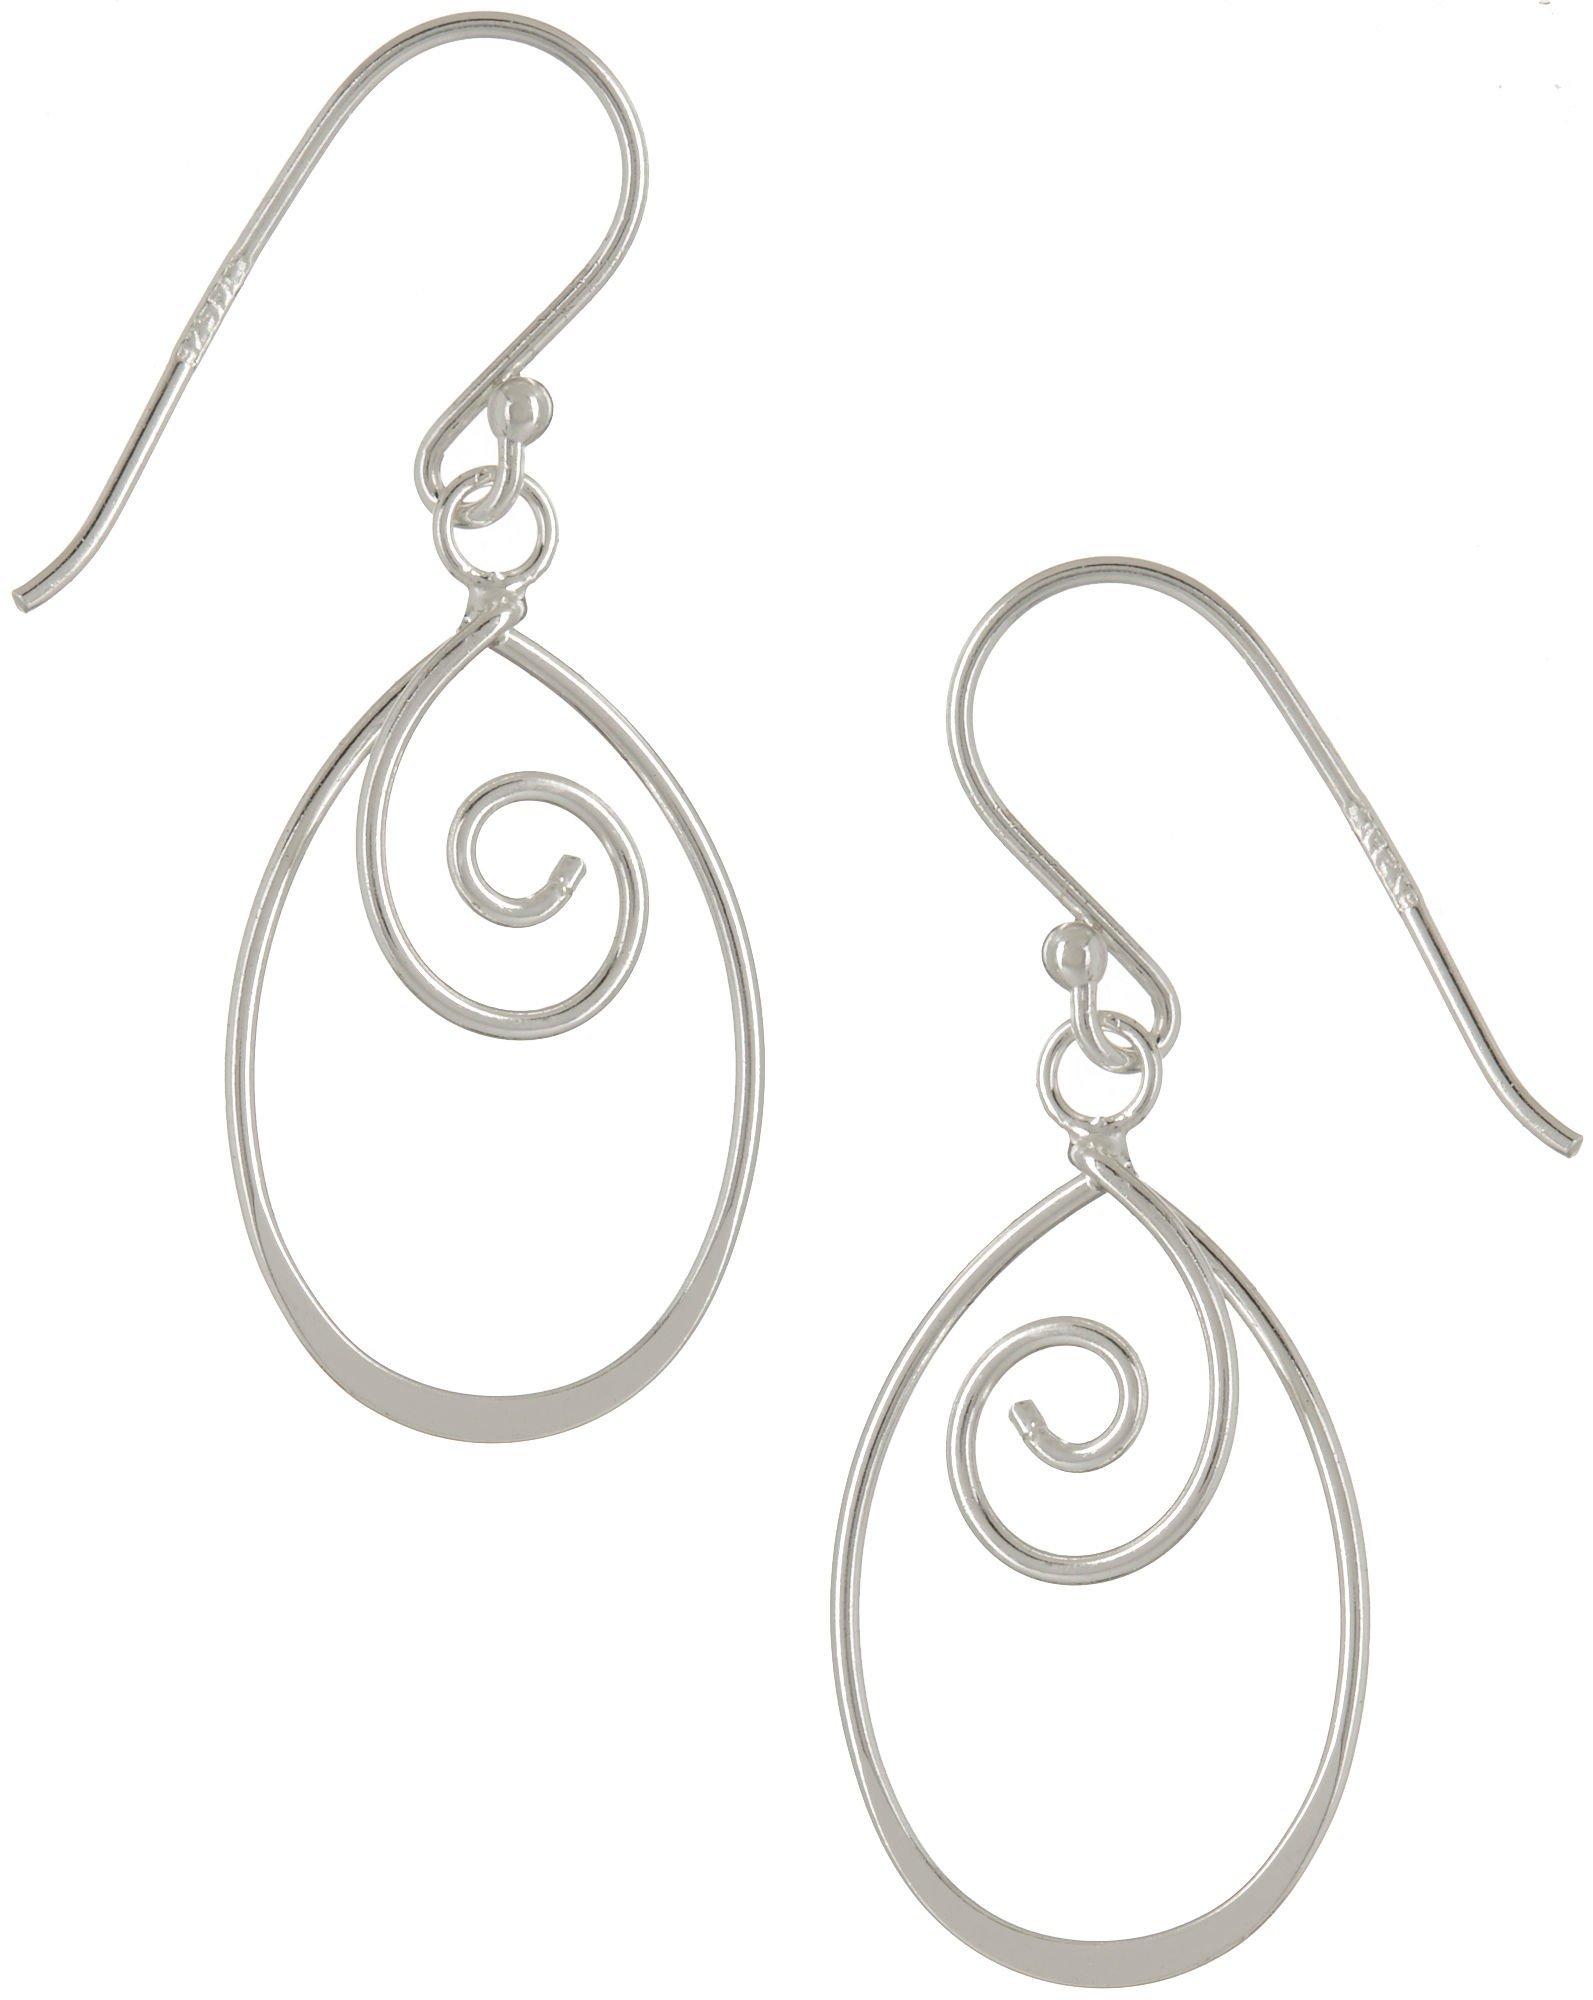 Swirled Oval Earrings